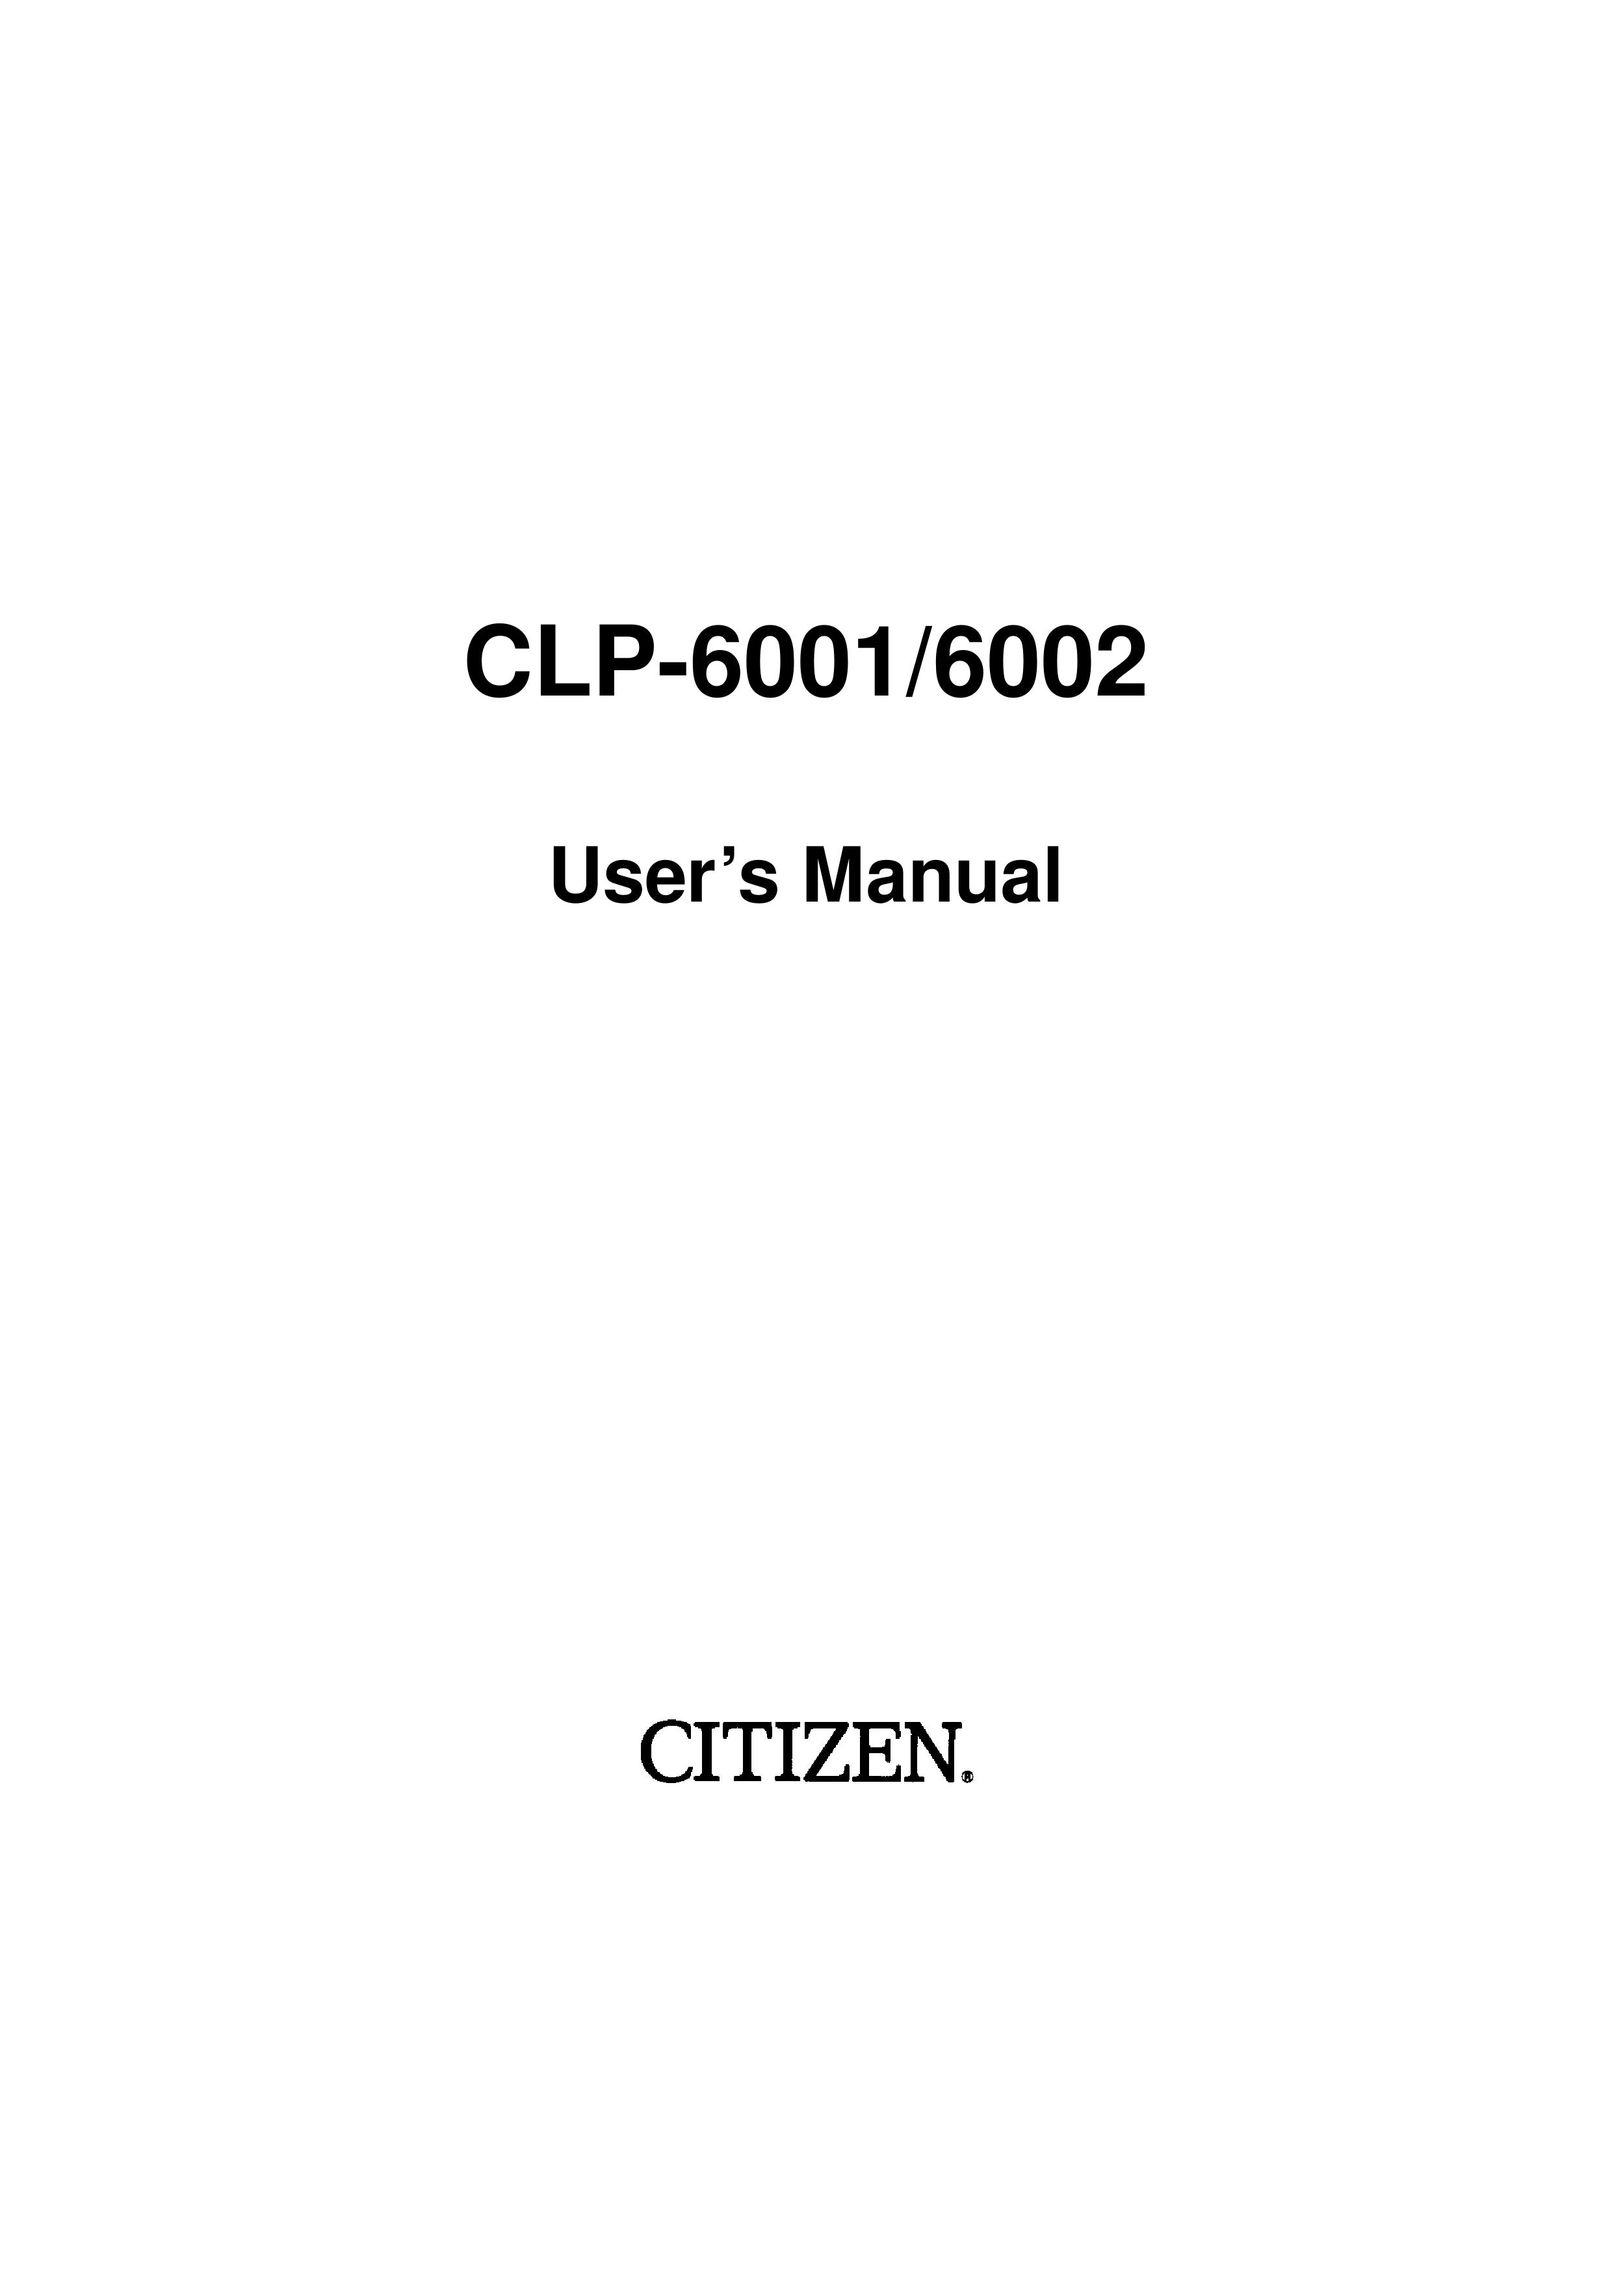 Citizen Systems CLP-6002 Printer User Manual